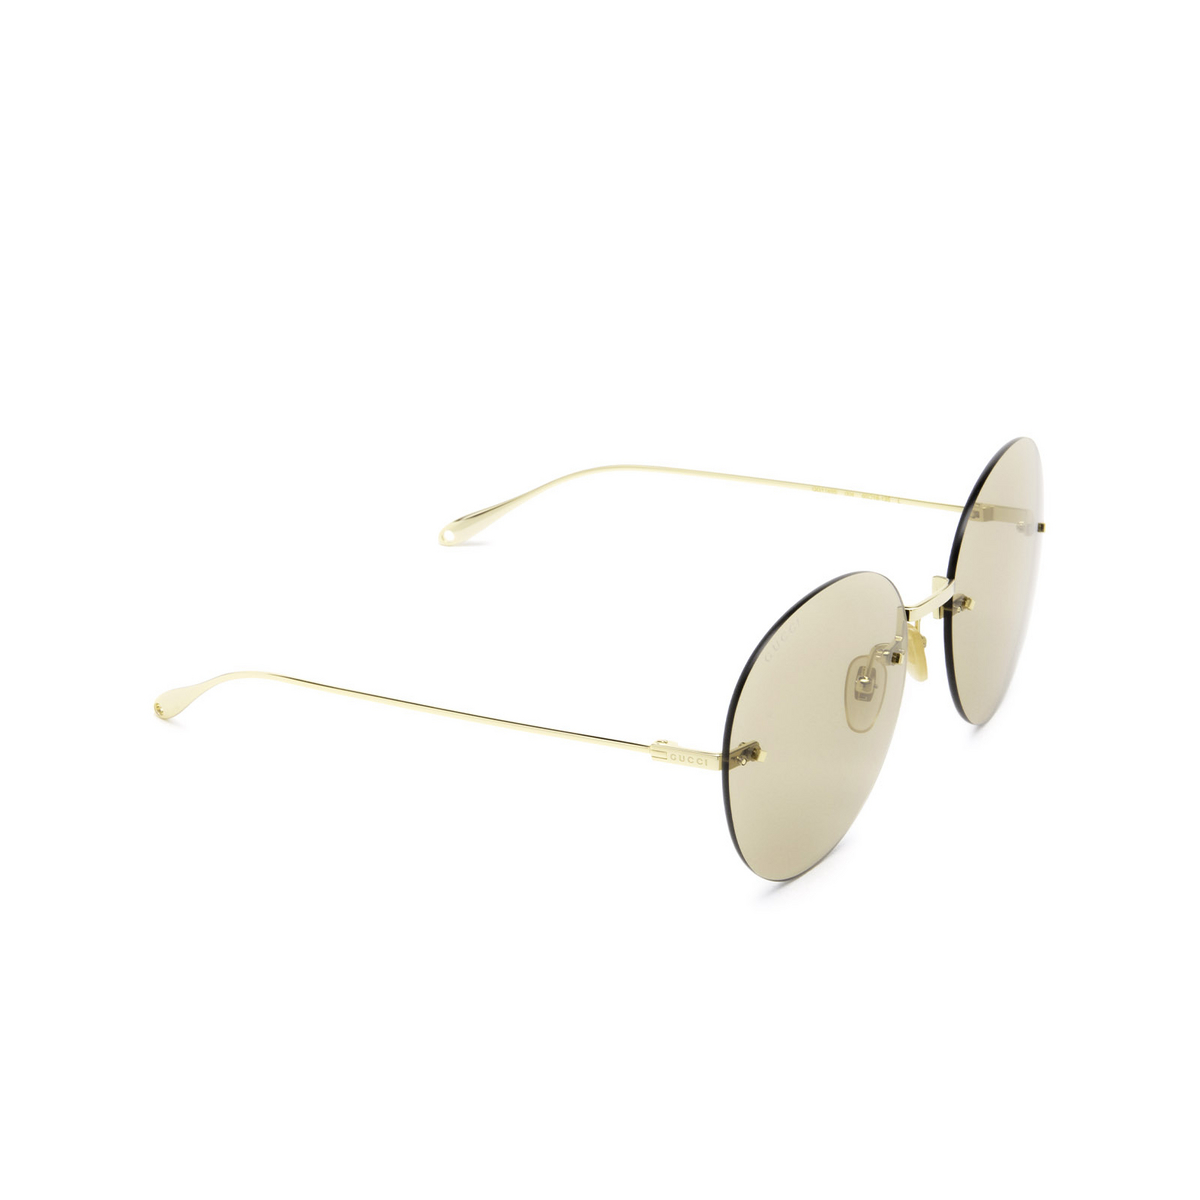 Gucci® Round Sunglasses: GG1149S color Gold 004 - three-quarters view.